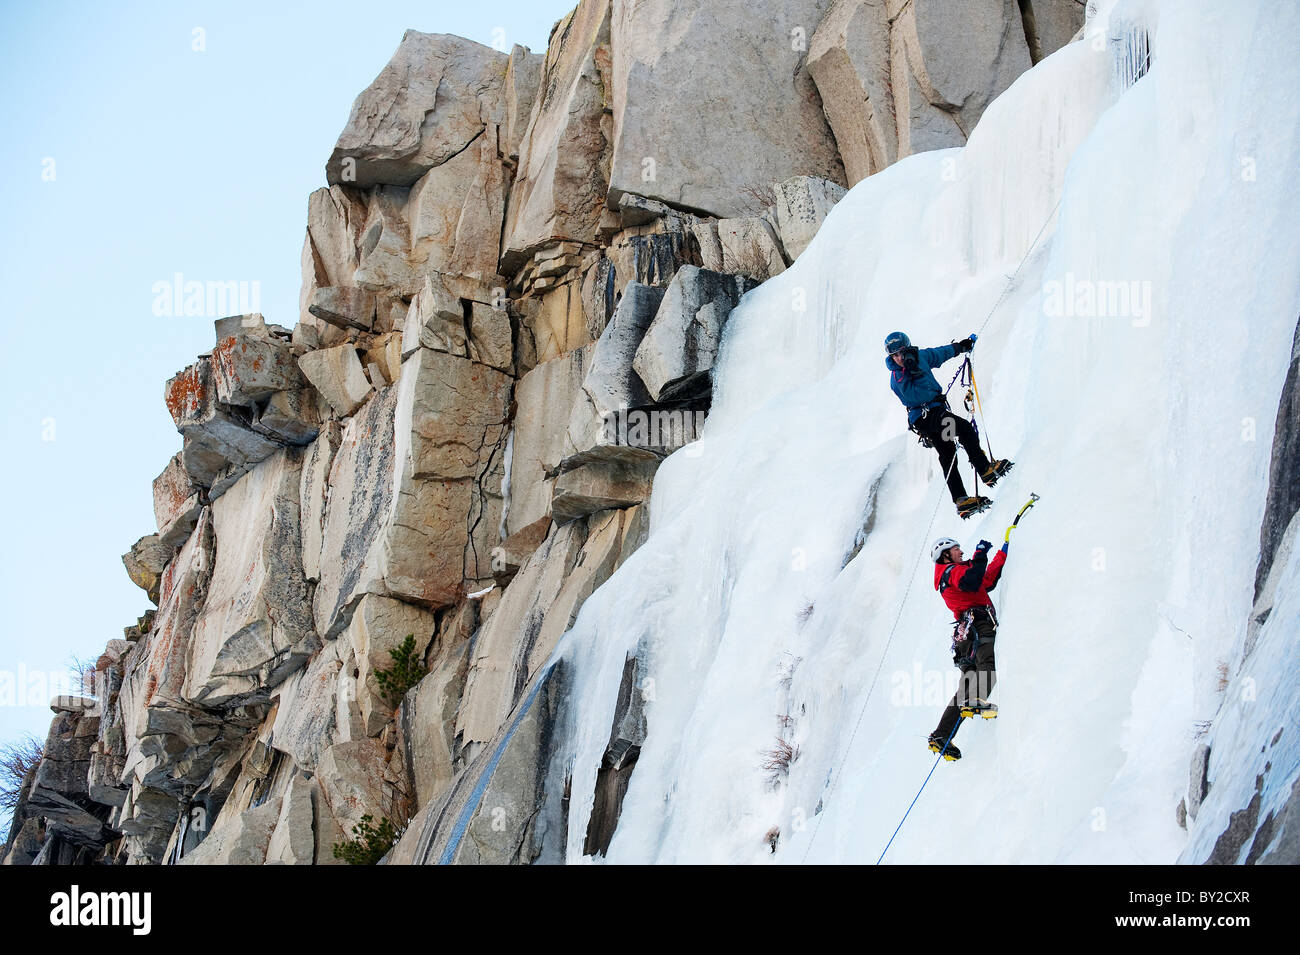 A photographer photographs an ice climber in Calif. Stock Photo